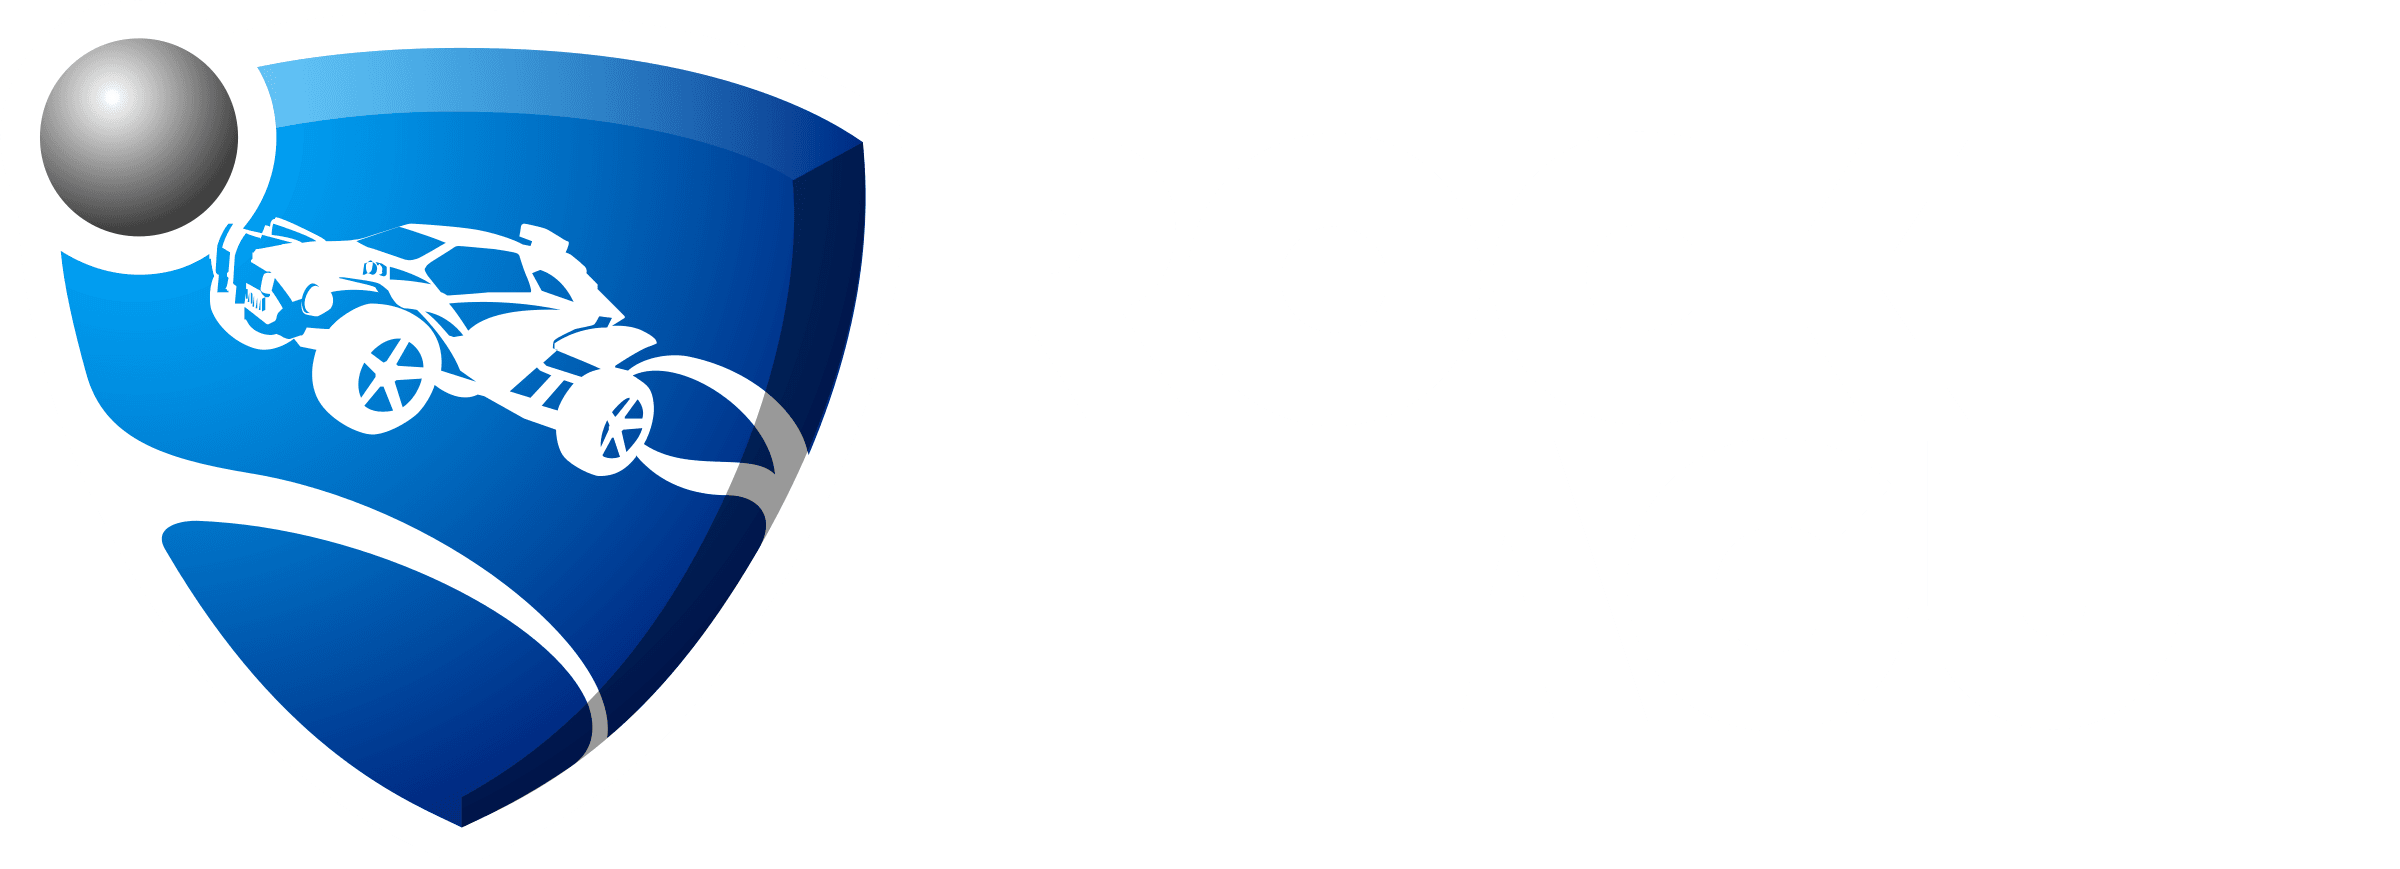 Rocket League-logo